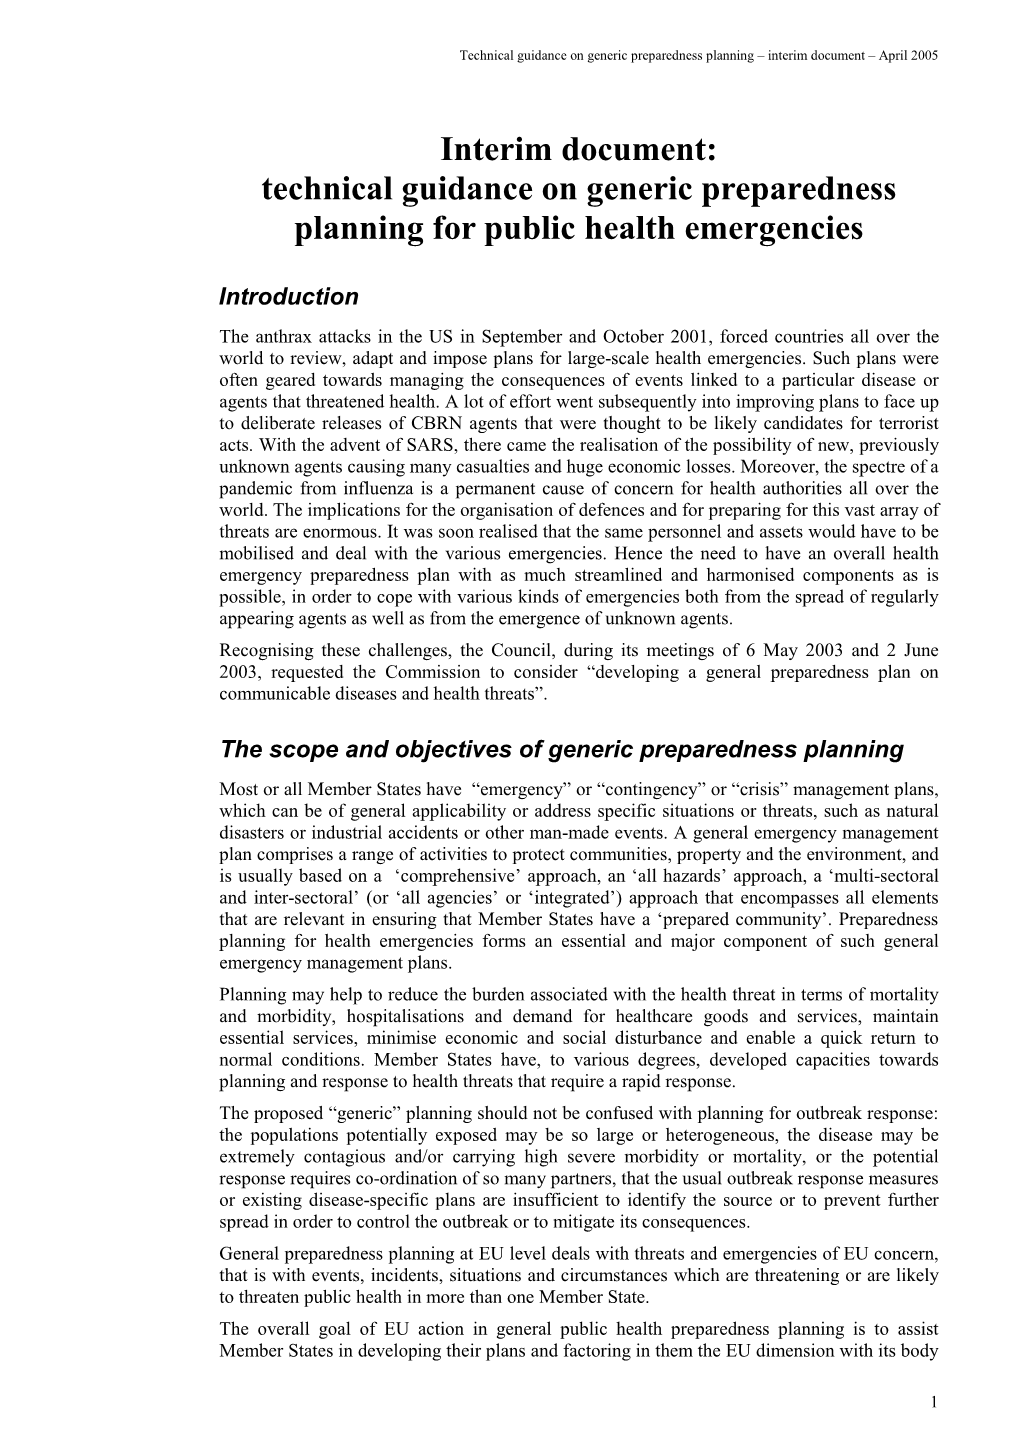 Interim Document: Technical Guidance on Generic Preparedness Planning for Public Health Emergencies